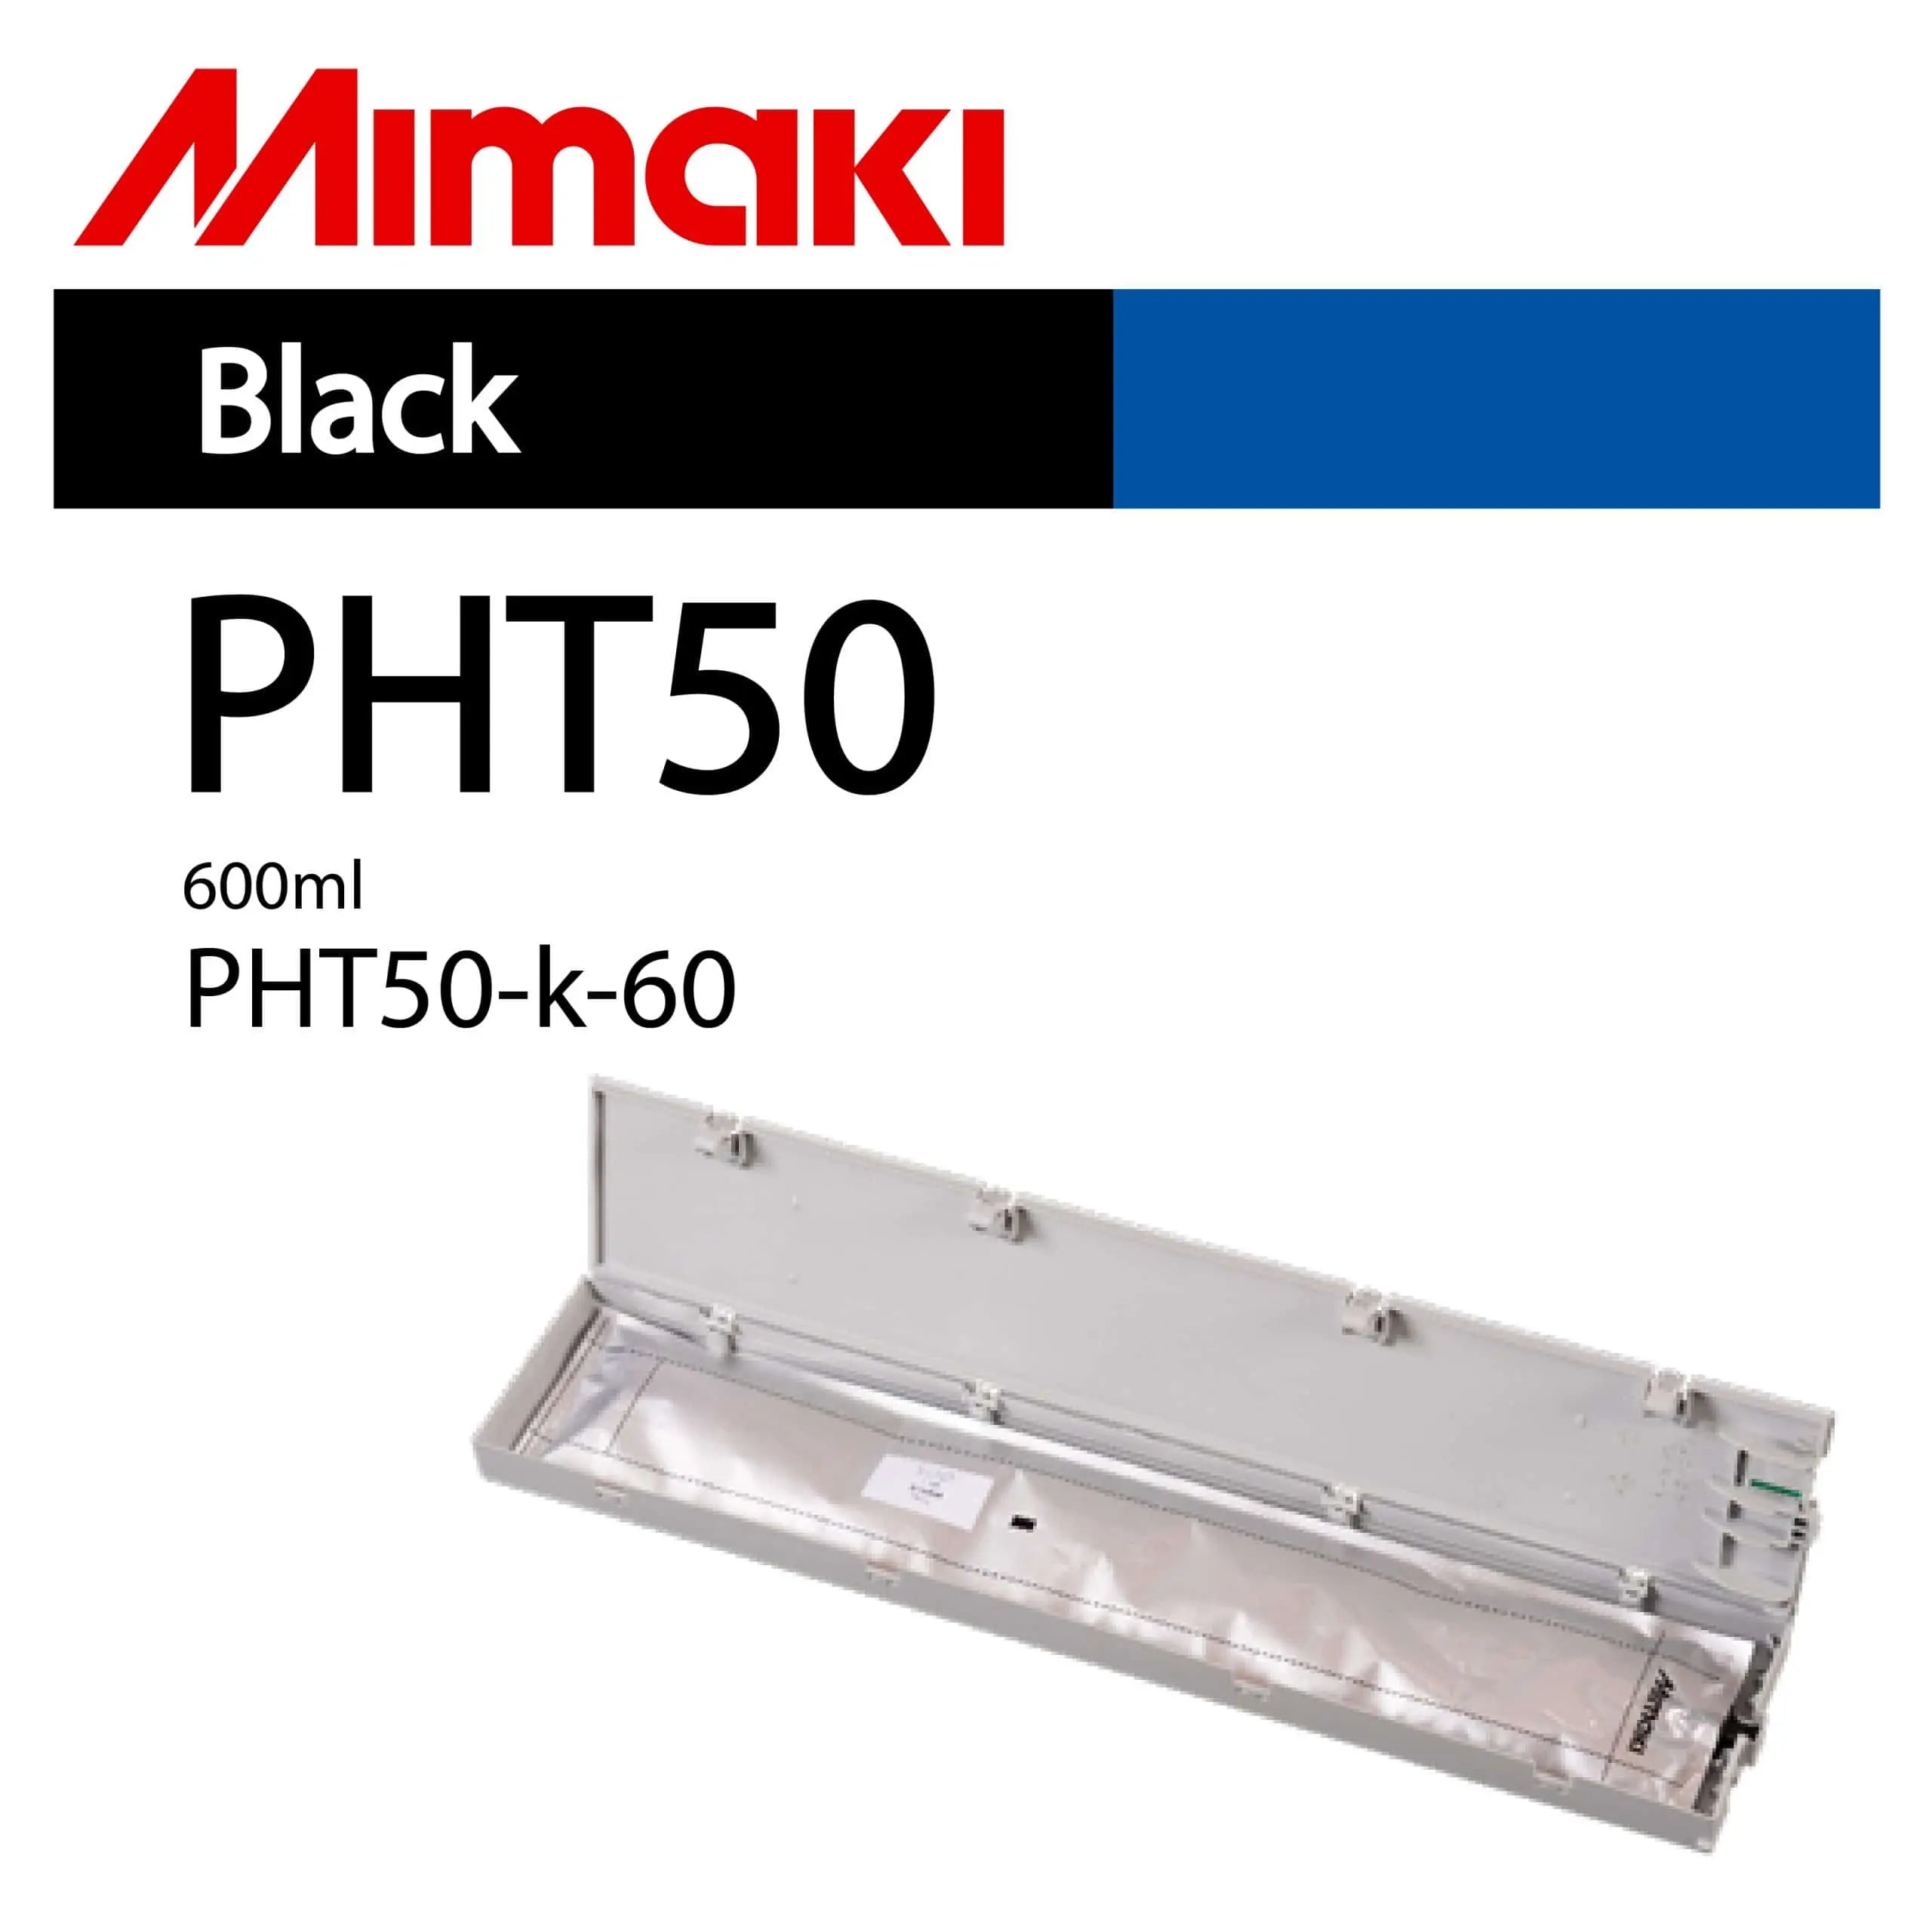 Mimaki PHT50-k-60 Black 600ml Ink Cartridge